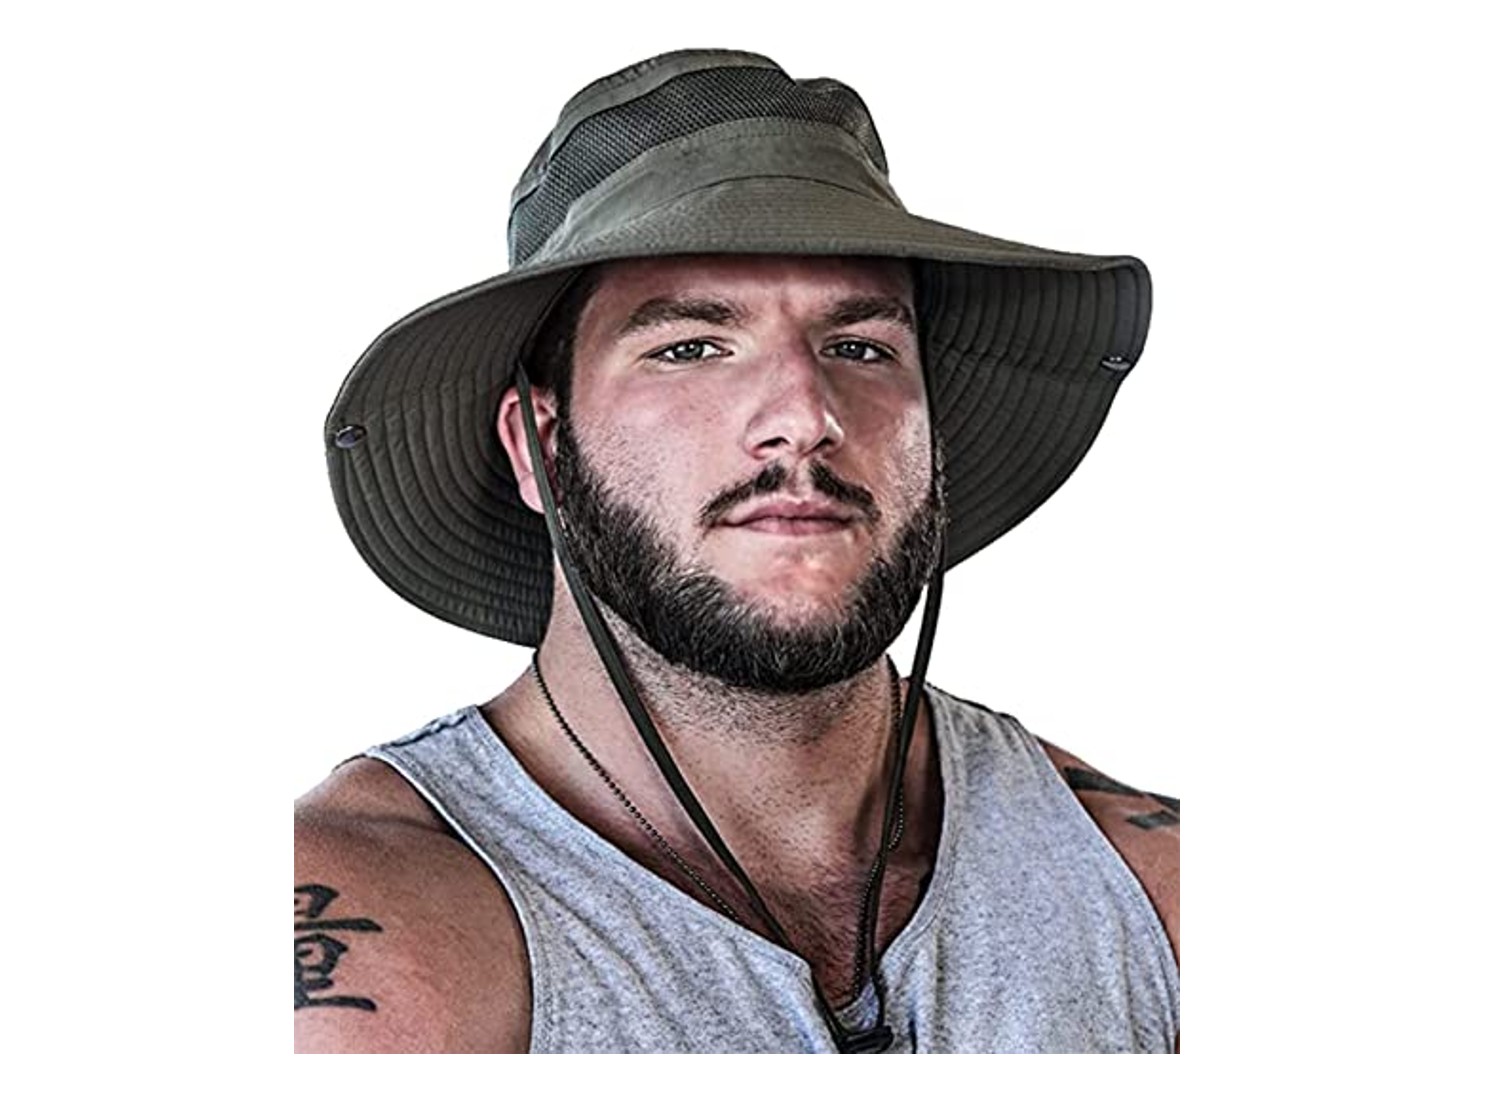 Top 15 Best Fishing Hats for Men - Sun Protection - Captain Content